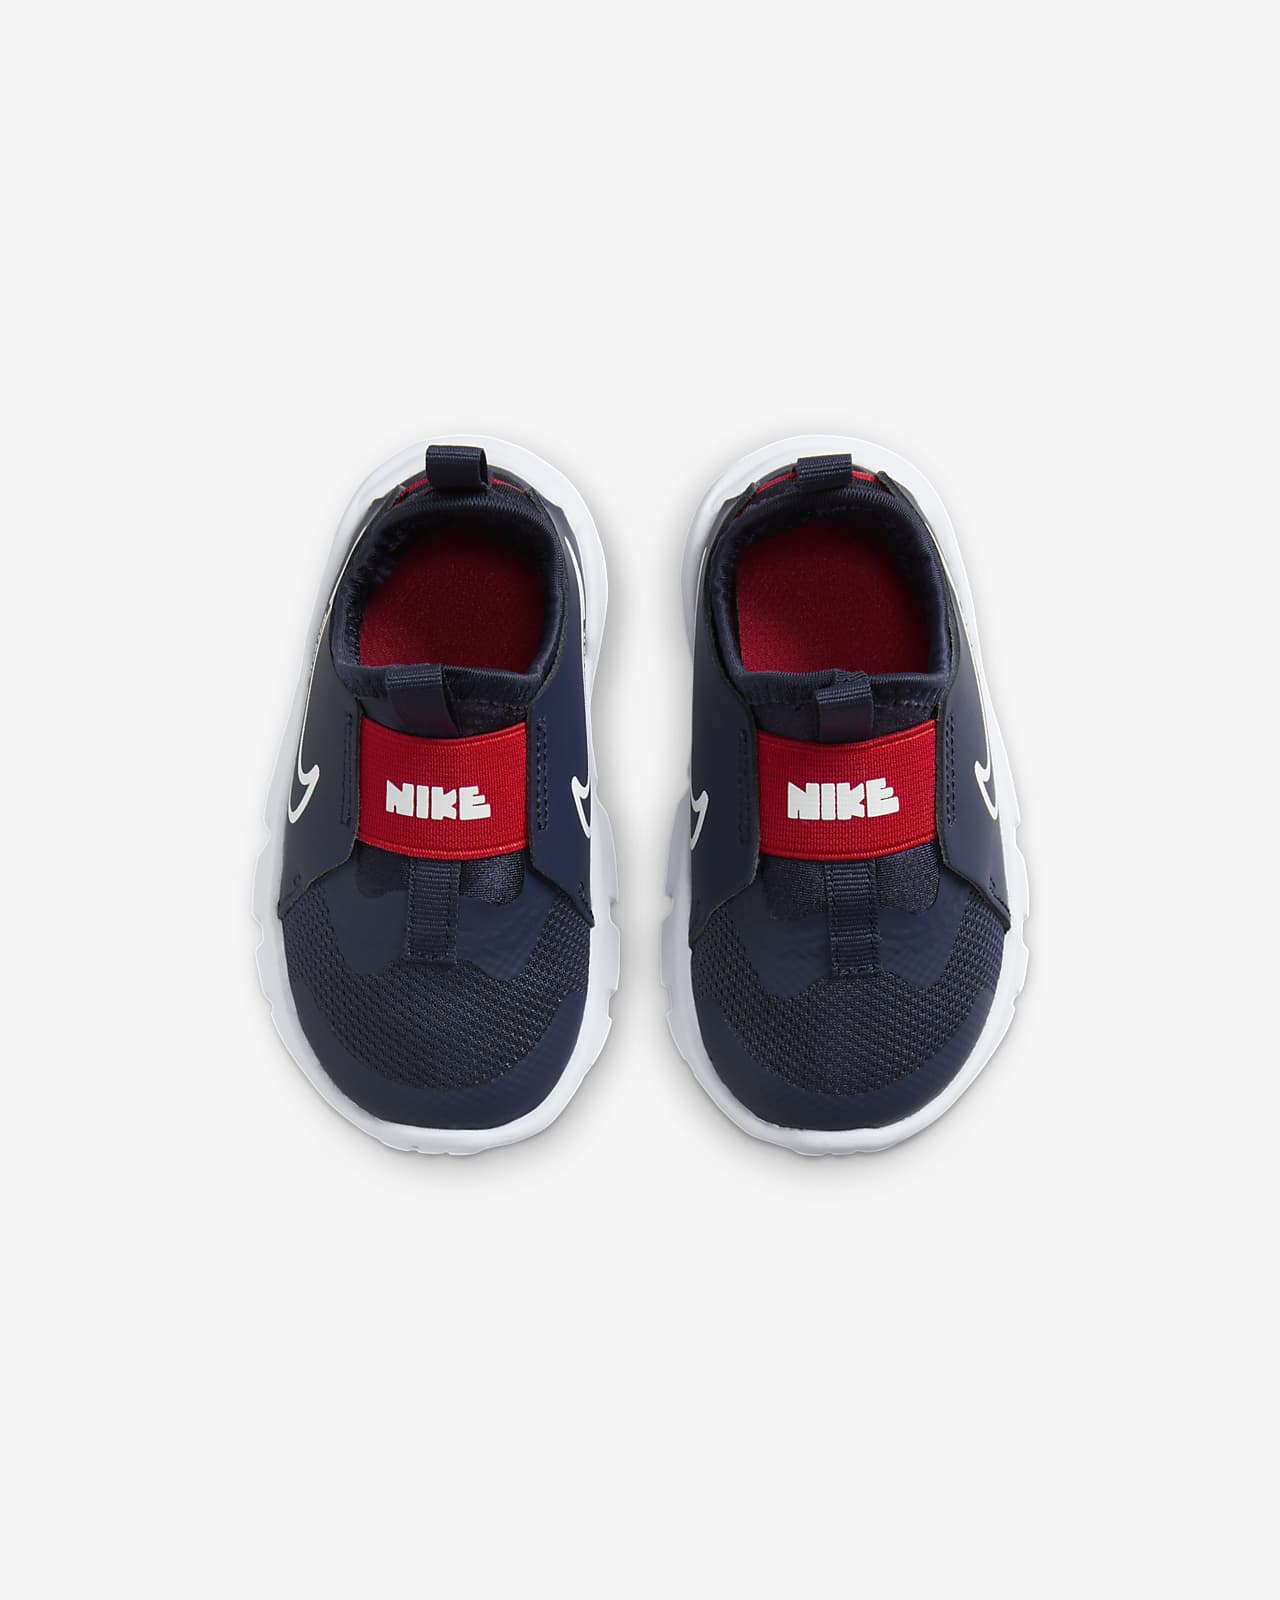 Nike Flex Runner 2 ID Shoes. Baby/Toddler Nike